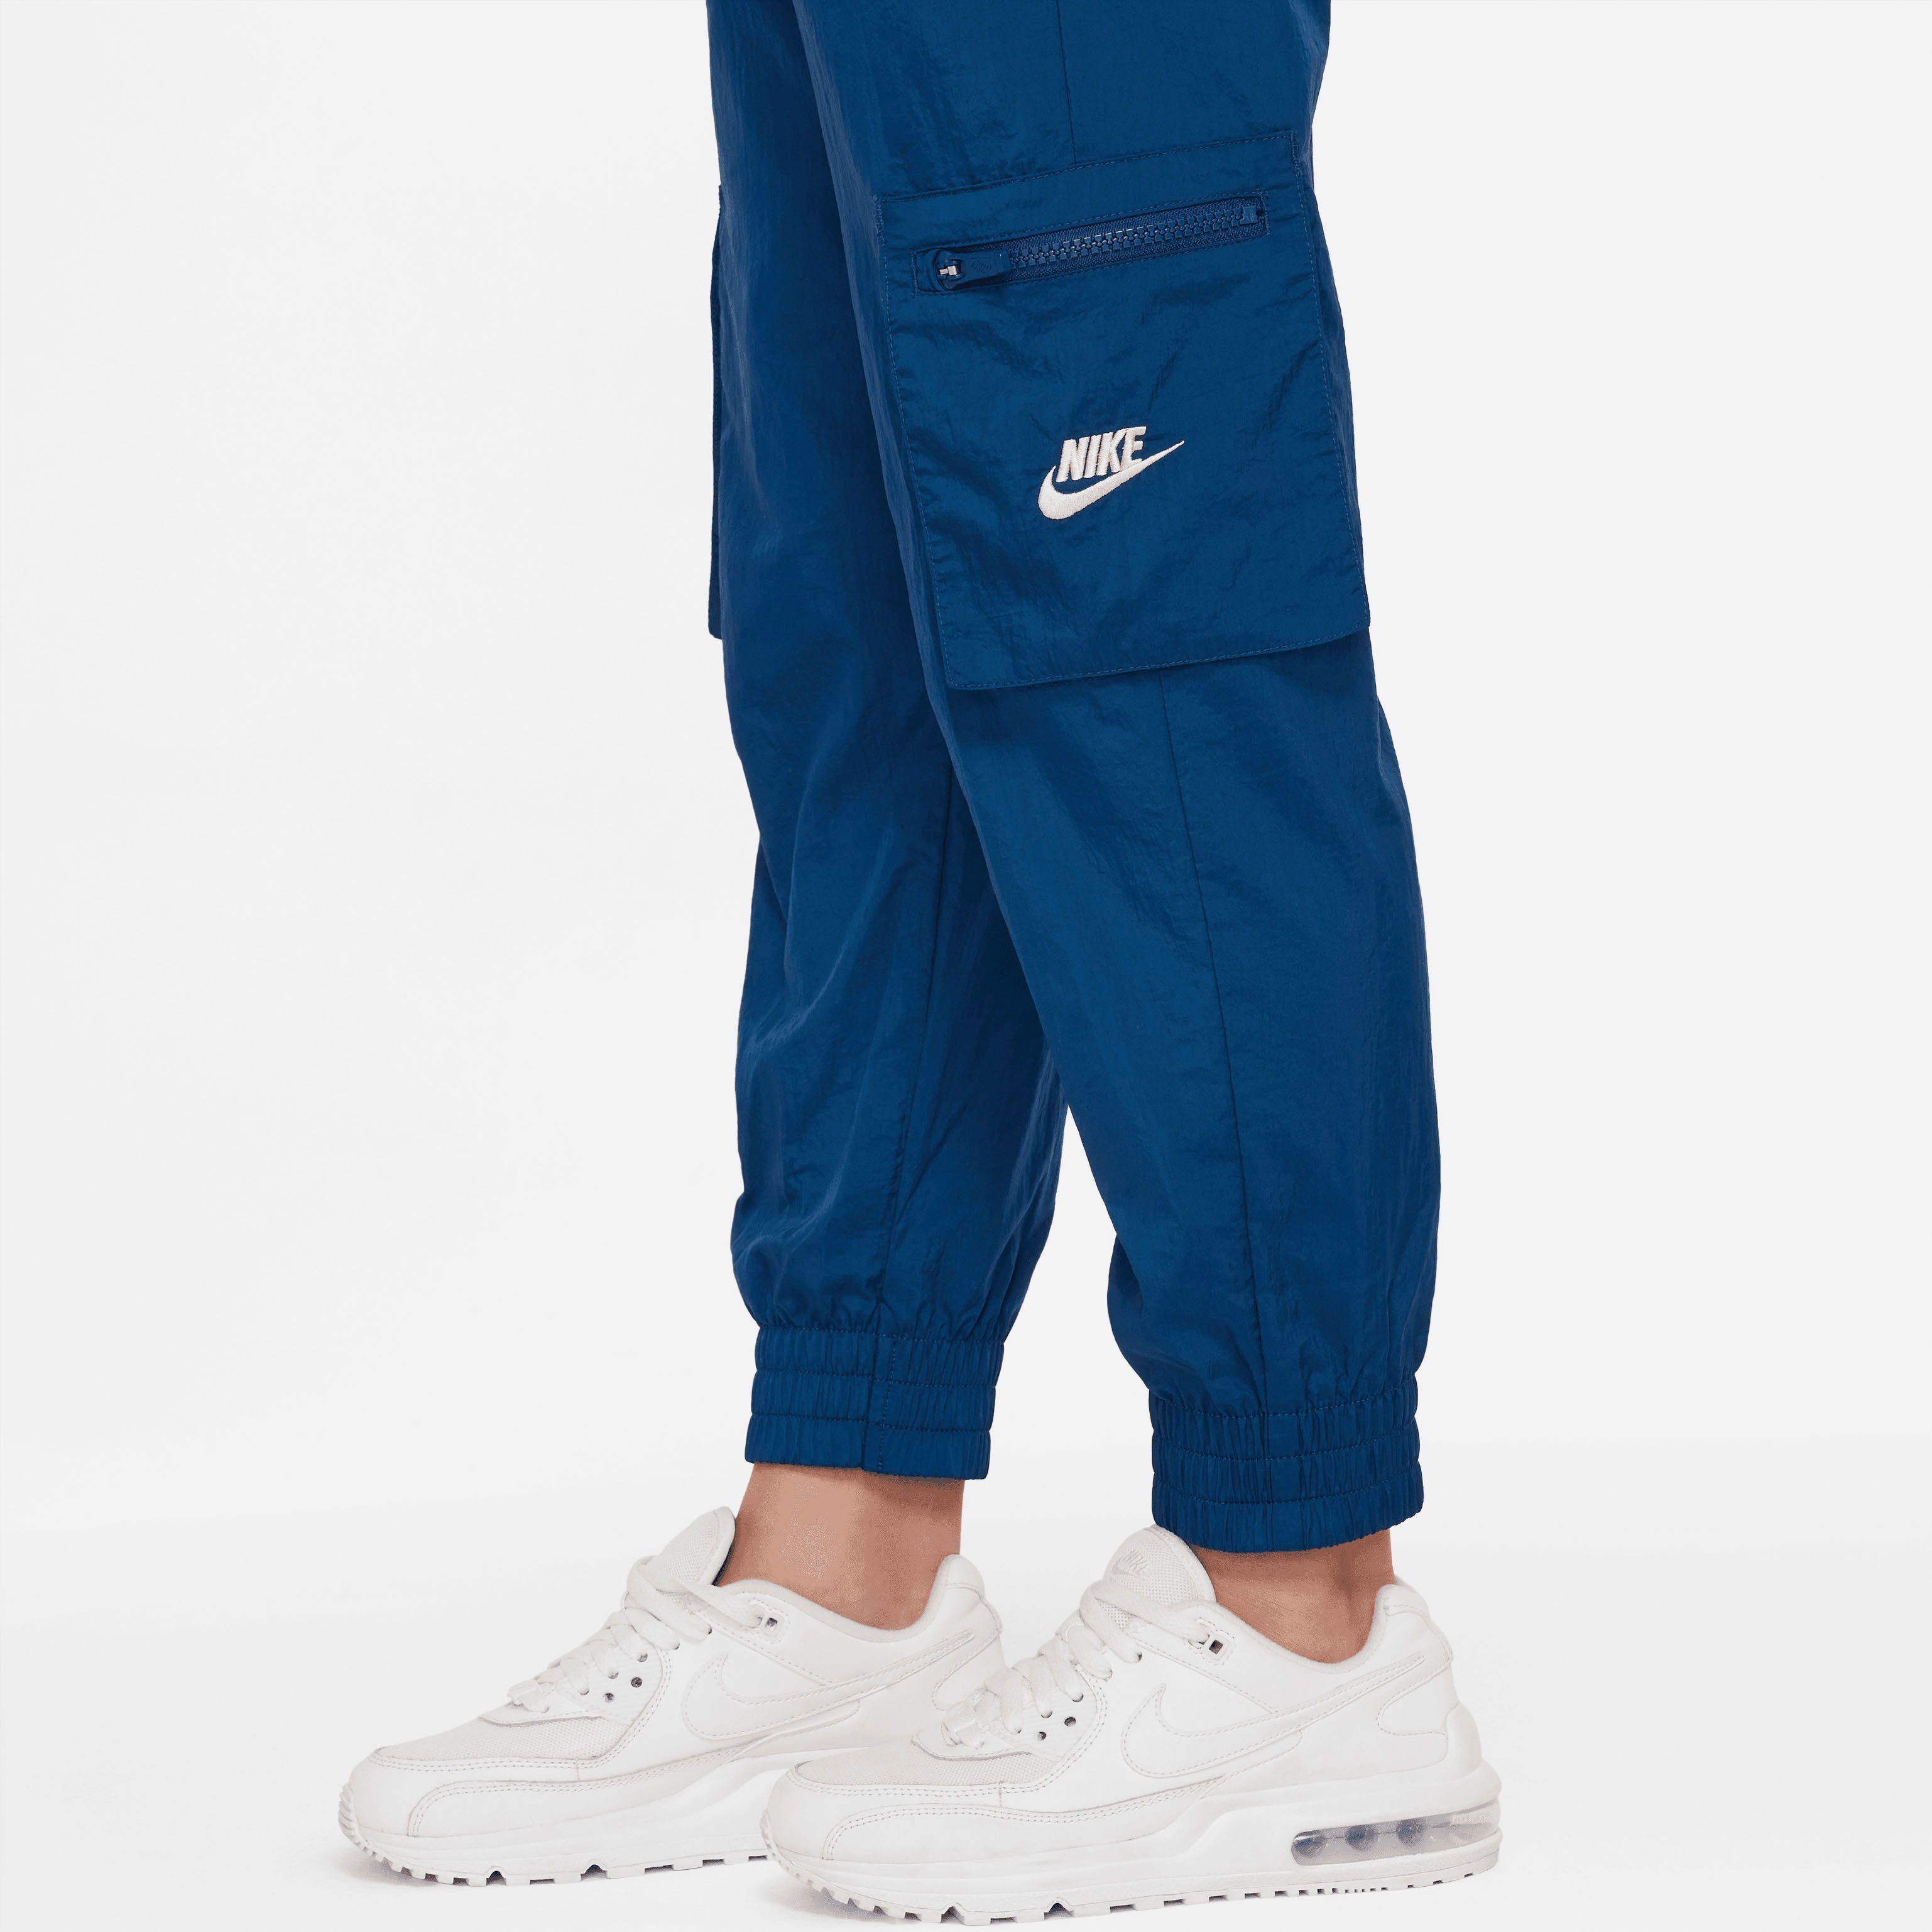 Big VALERIAN ORANGE Cargo Pants Sportswear Sporthose BLUE/ARCTIC Nike Woven (Girls) Kids'